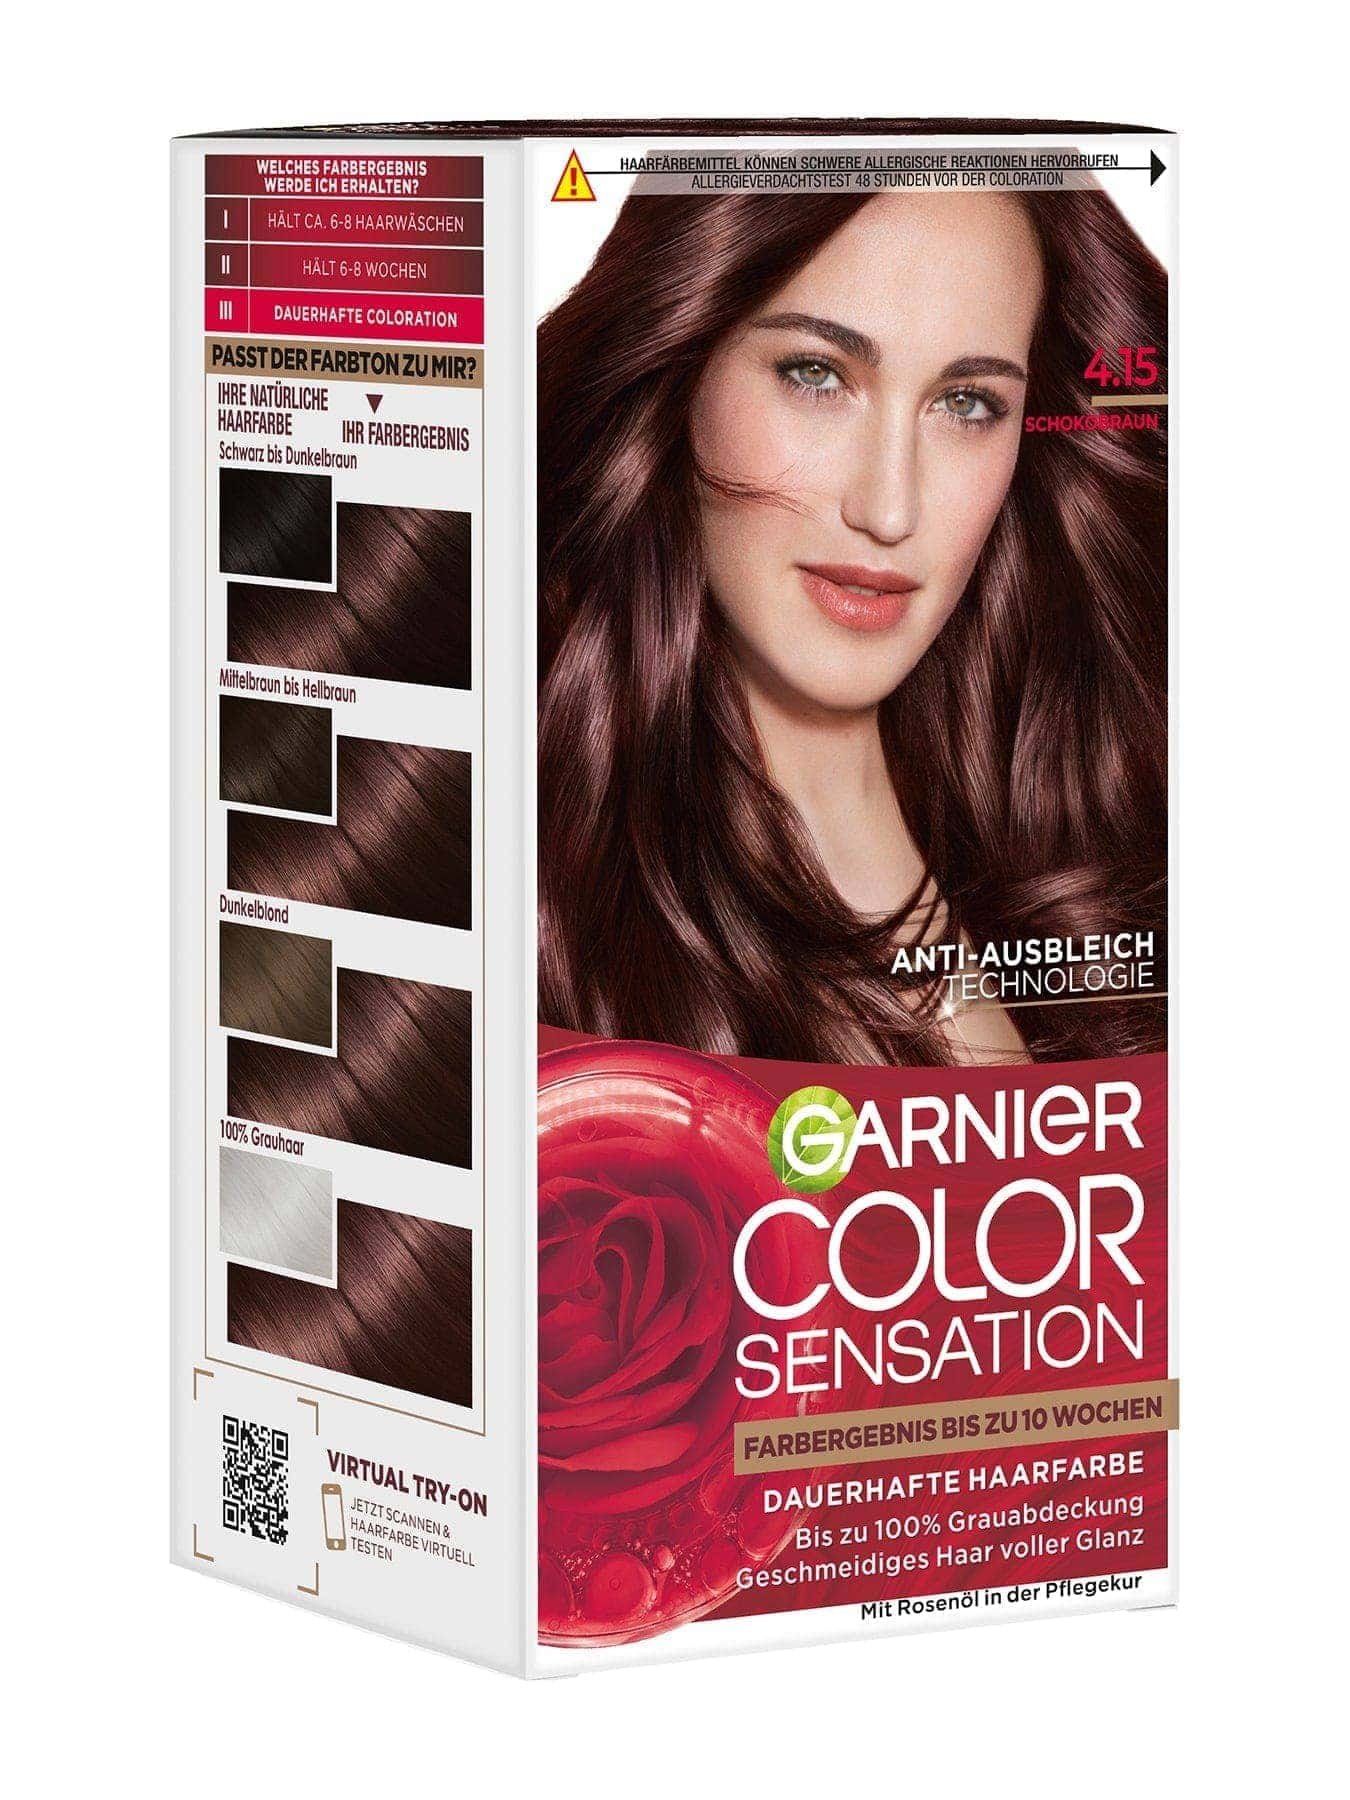 Color Sensation dauerhafte Haarfarbe 4.15 Schokobraun Produktbild